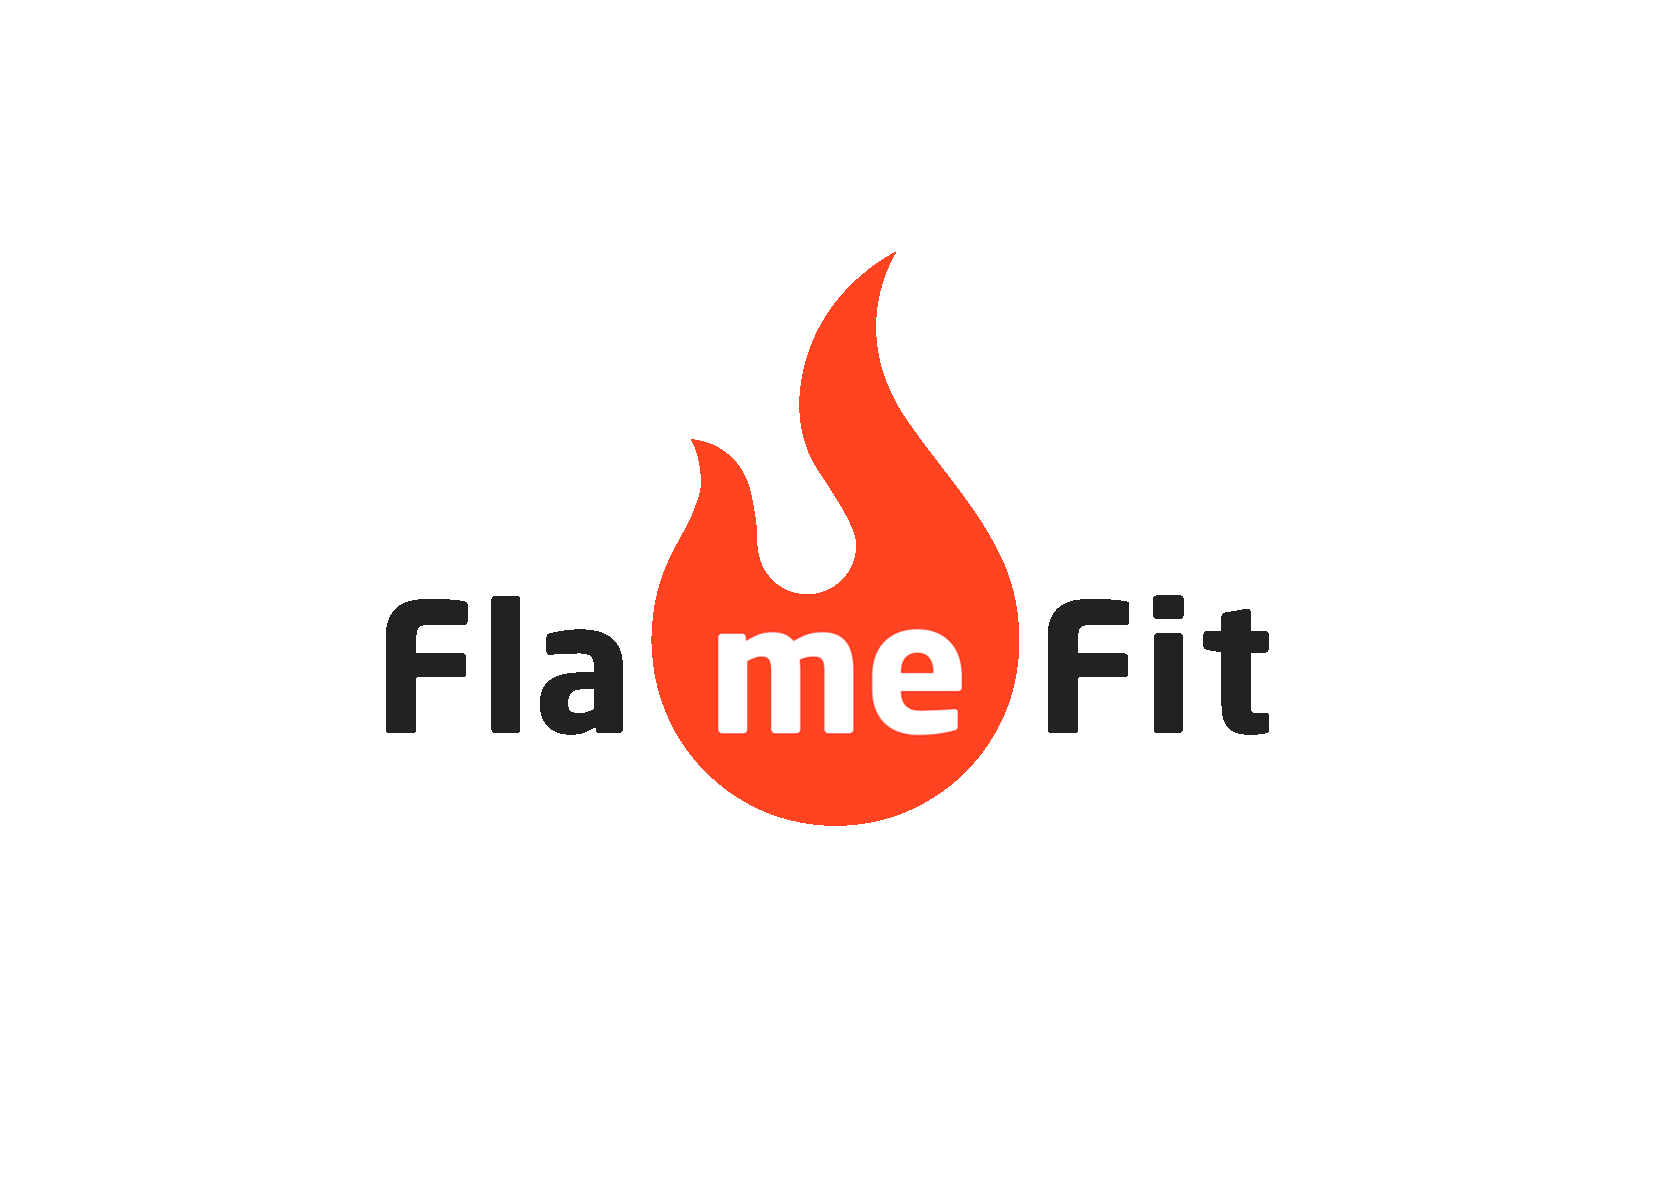  FlameFit 